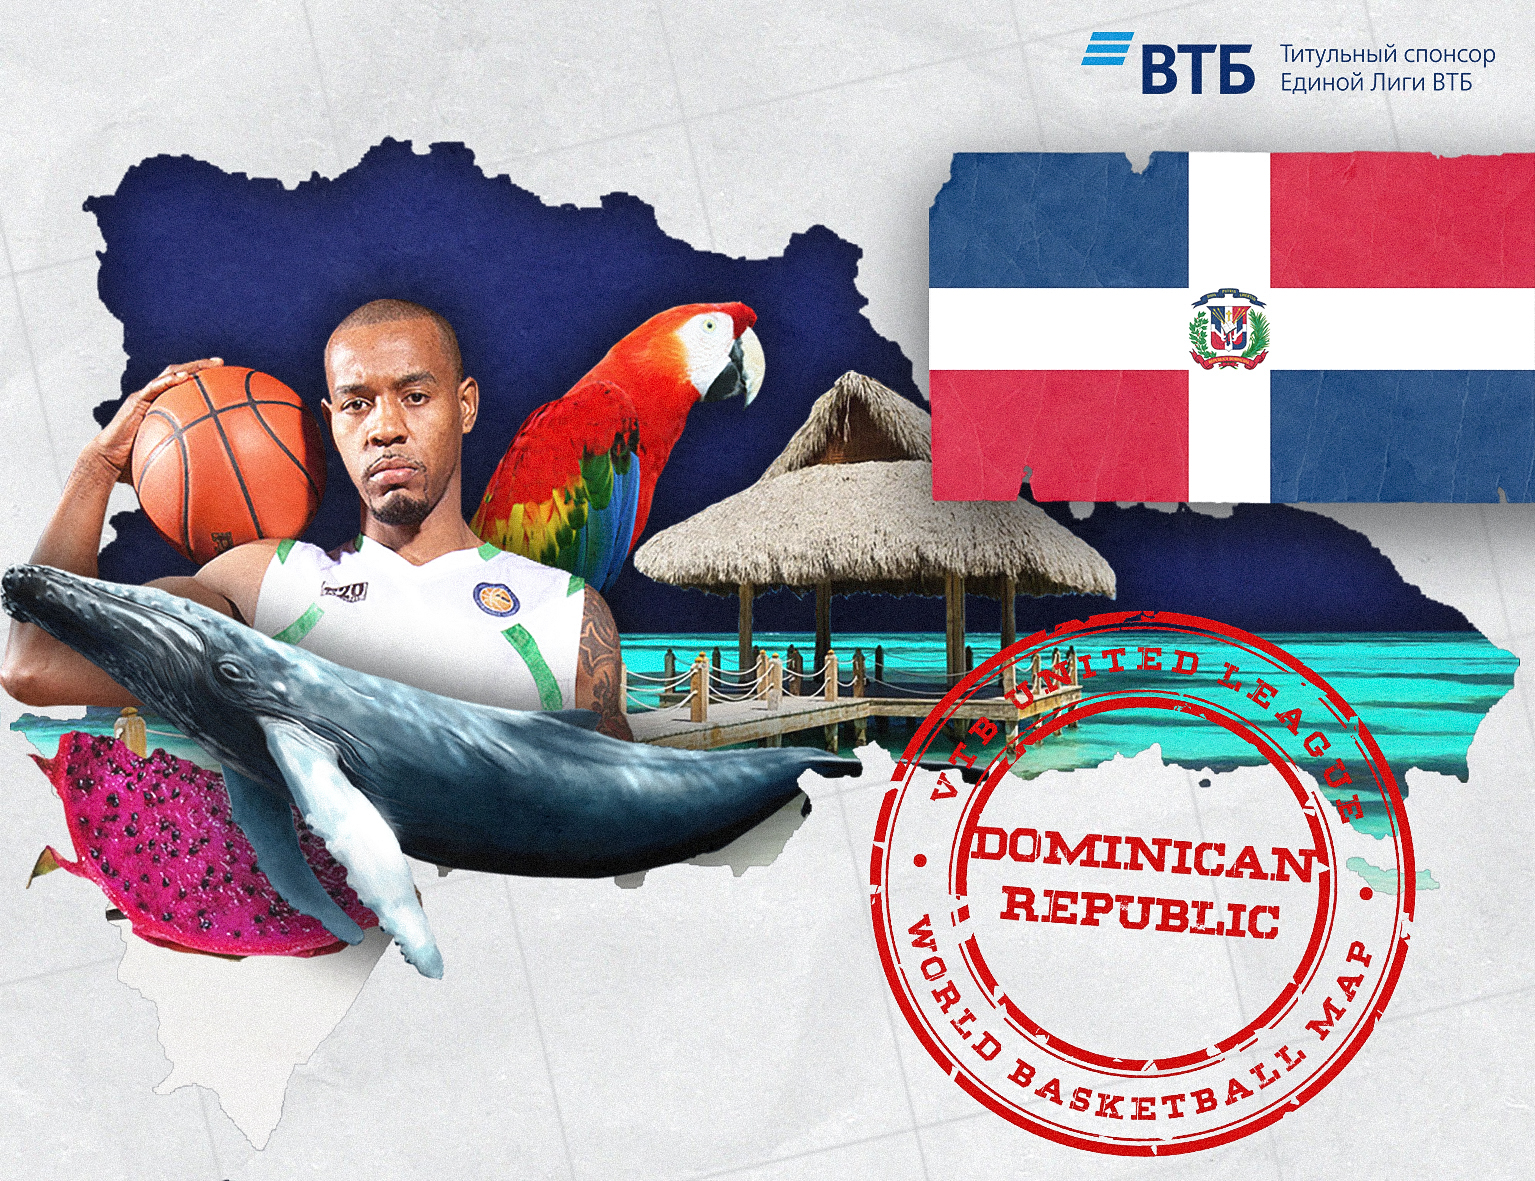 World basketball map: Dominican Republic